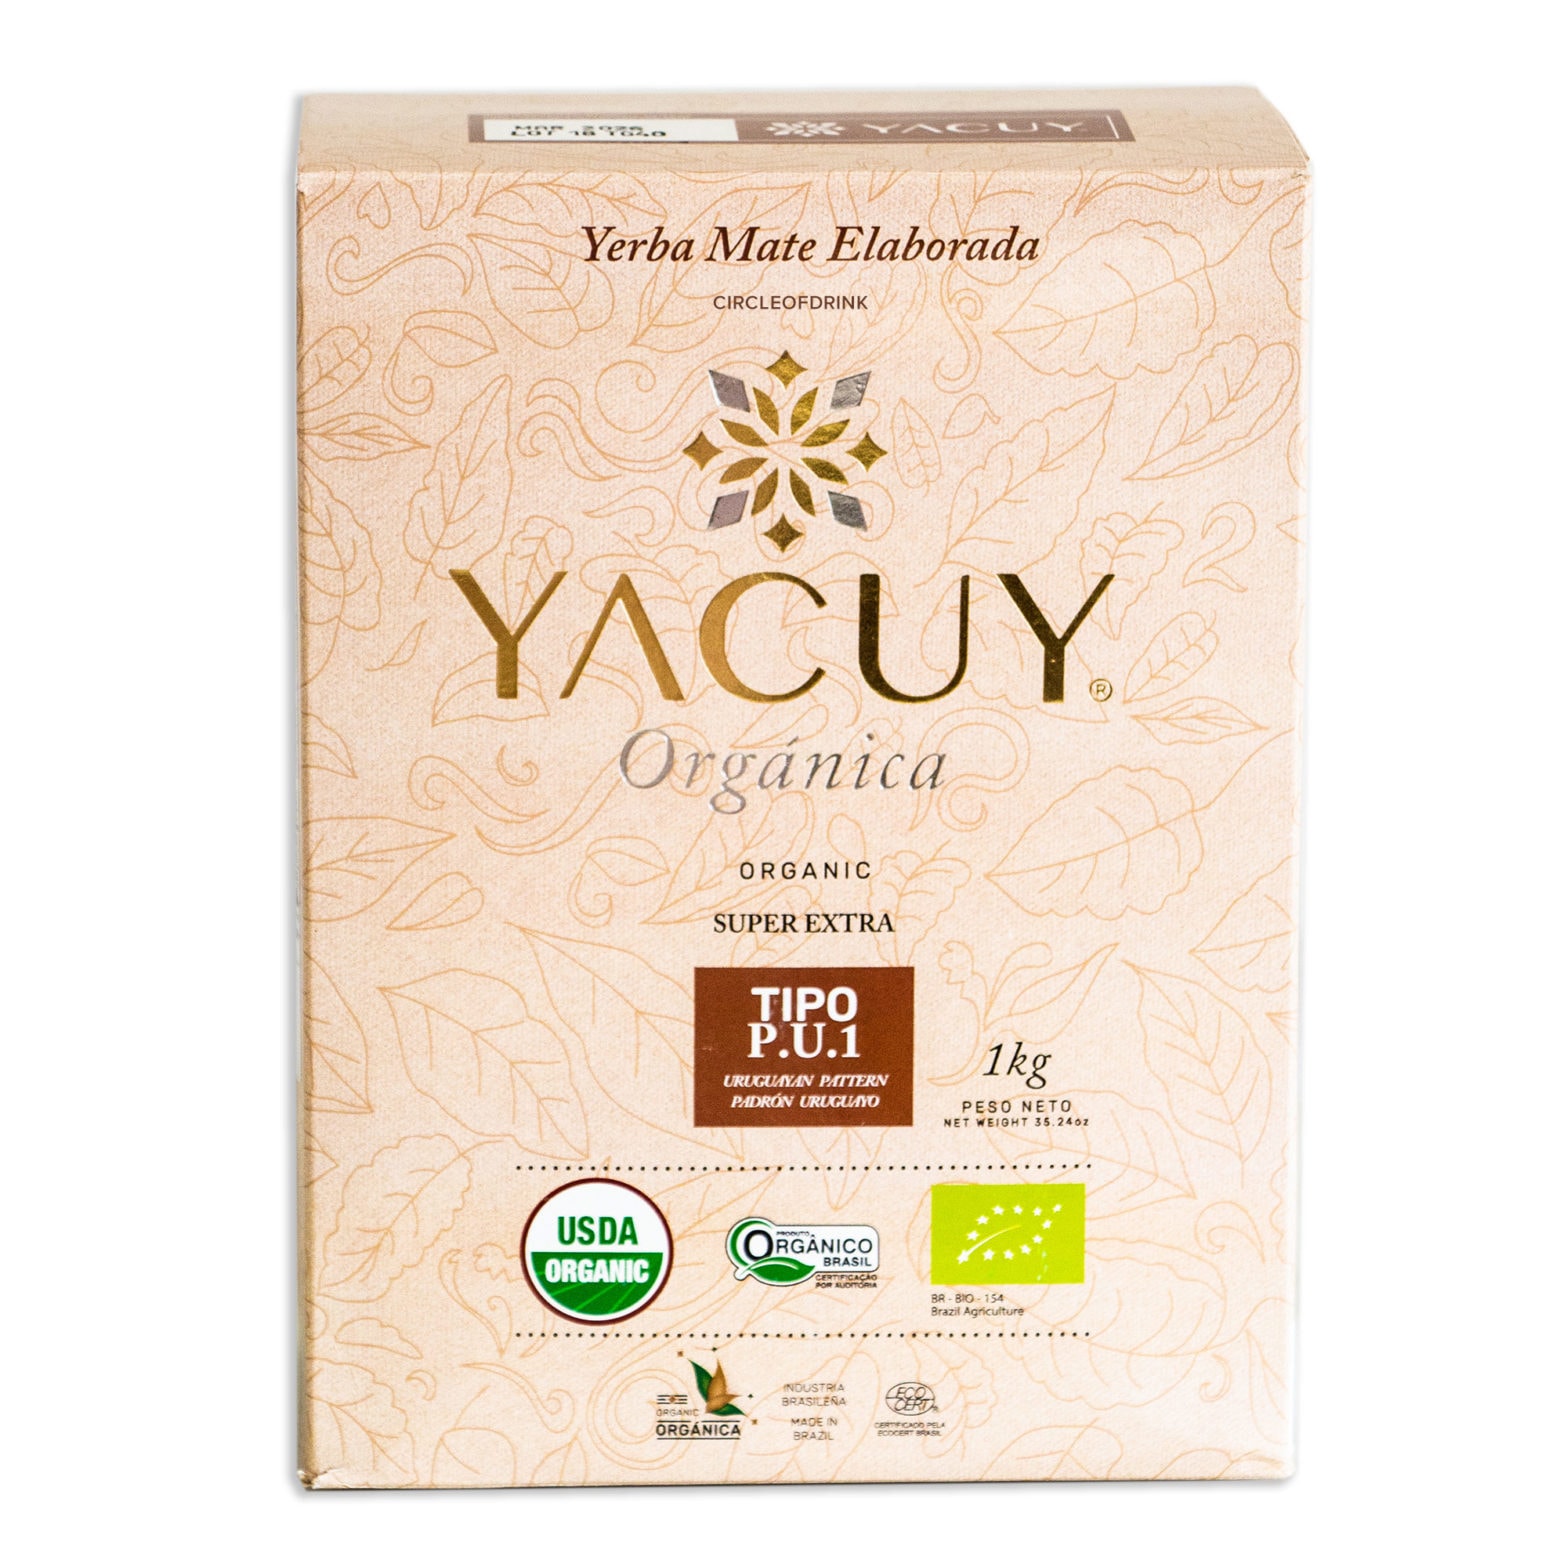 Yacuy Super Extra Certified Organic Yerba Mate - Vacuum Sealed 1kg, 2.2 lbs